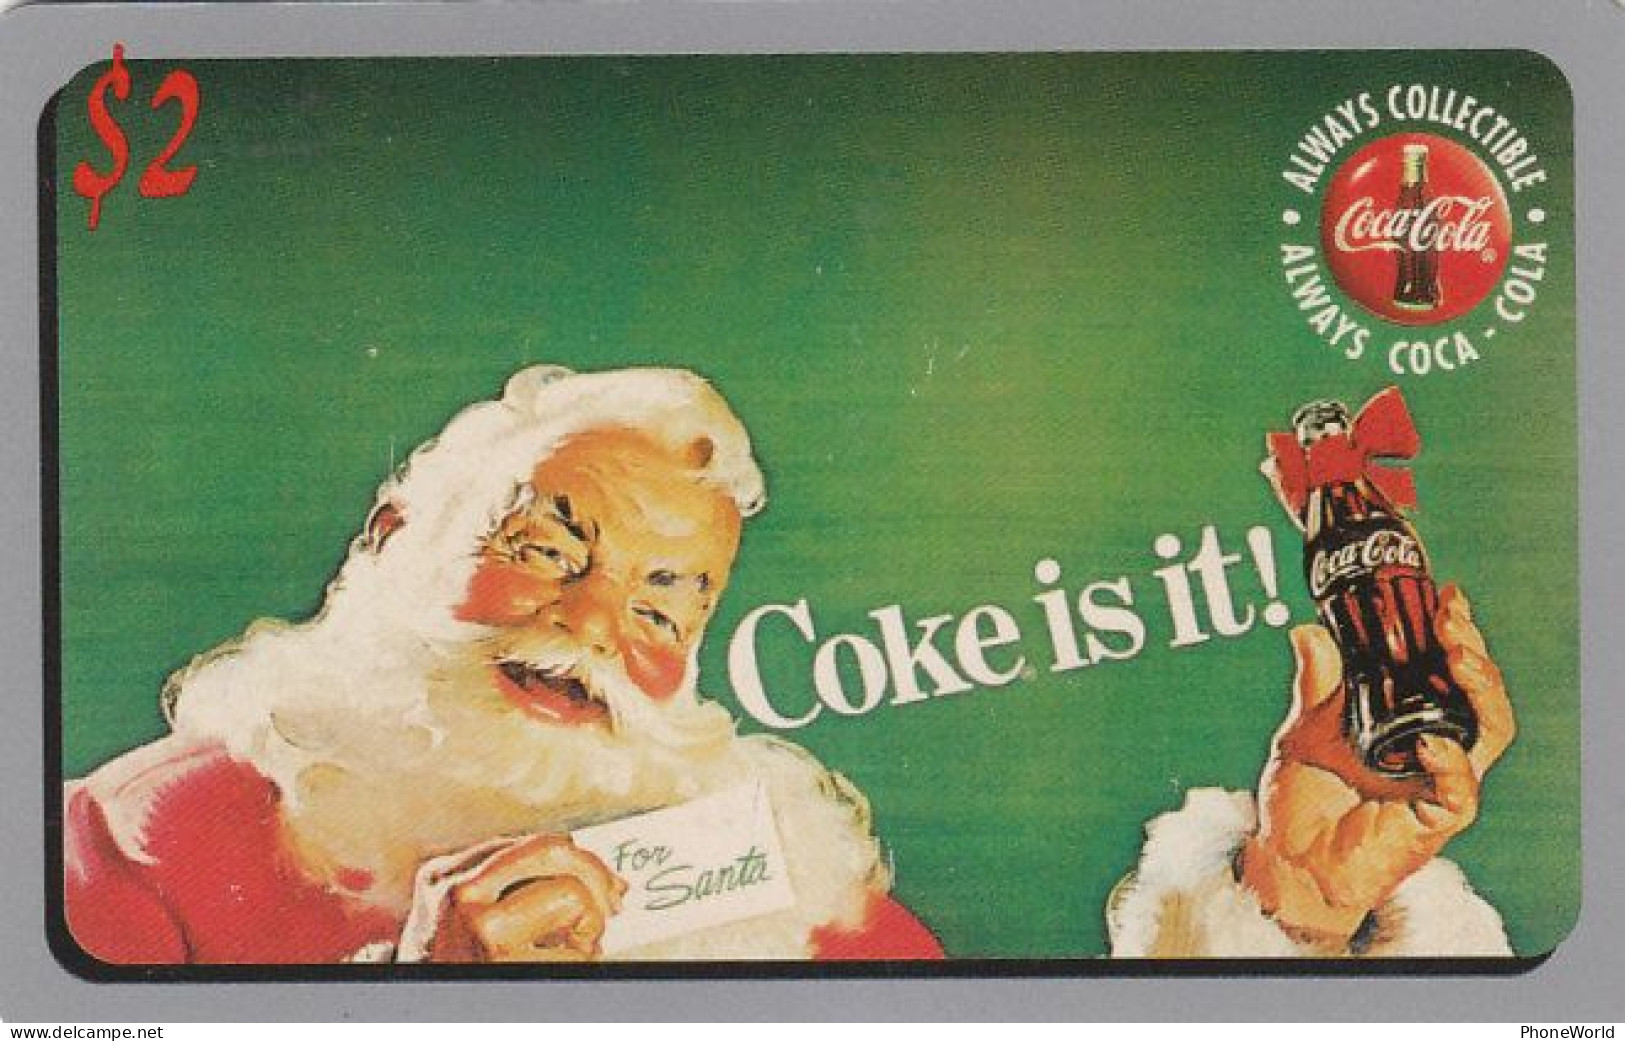 US, Sprint/Score Board $2 Coca-Cola 12/95, Coke Is It! Santa Claus - Mint - Sprint